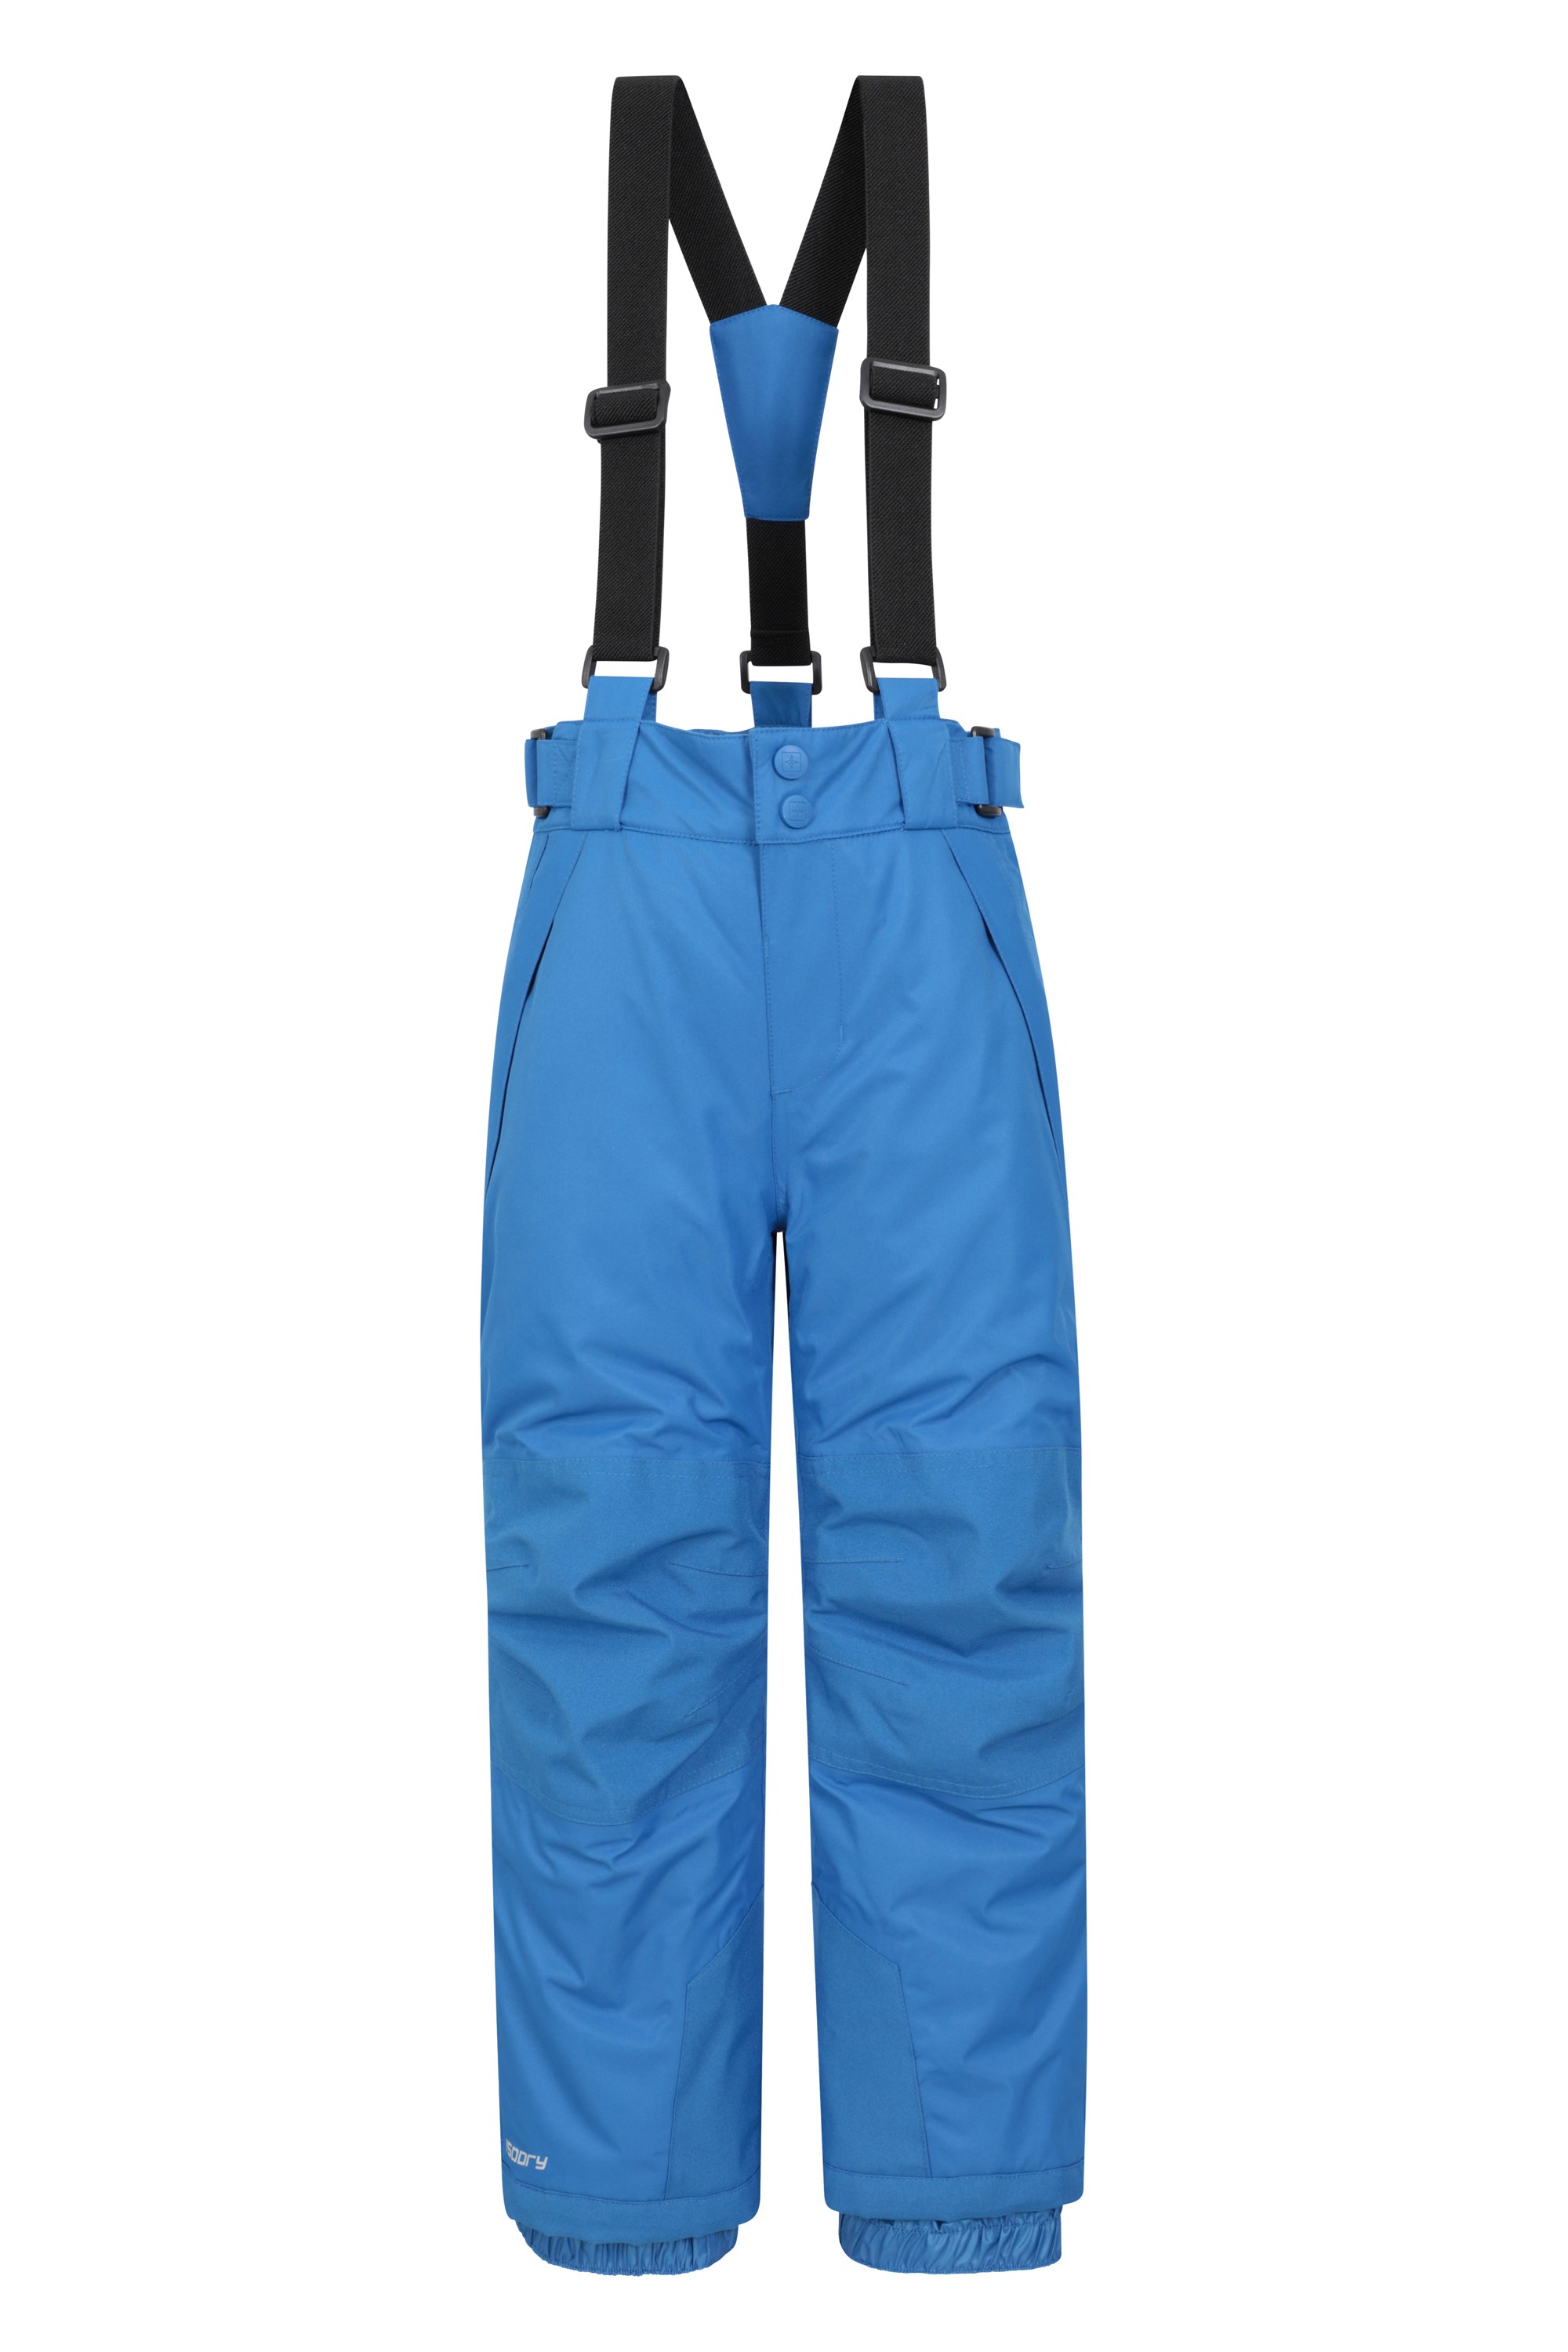 Toomett Boys Snow Waterproof Hiking Pants,Girls Kids ski Outdoor Fleece- Lined Soft Shell Insulated Winter Pants,1510,Rose-3XL(18 Years)